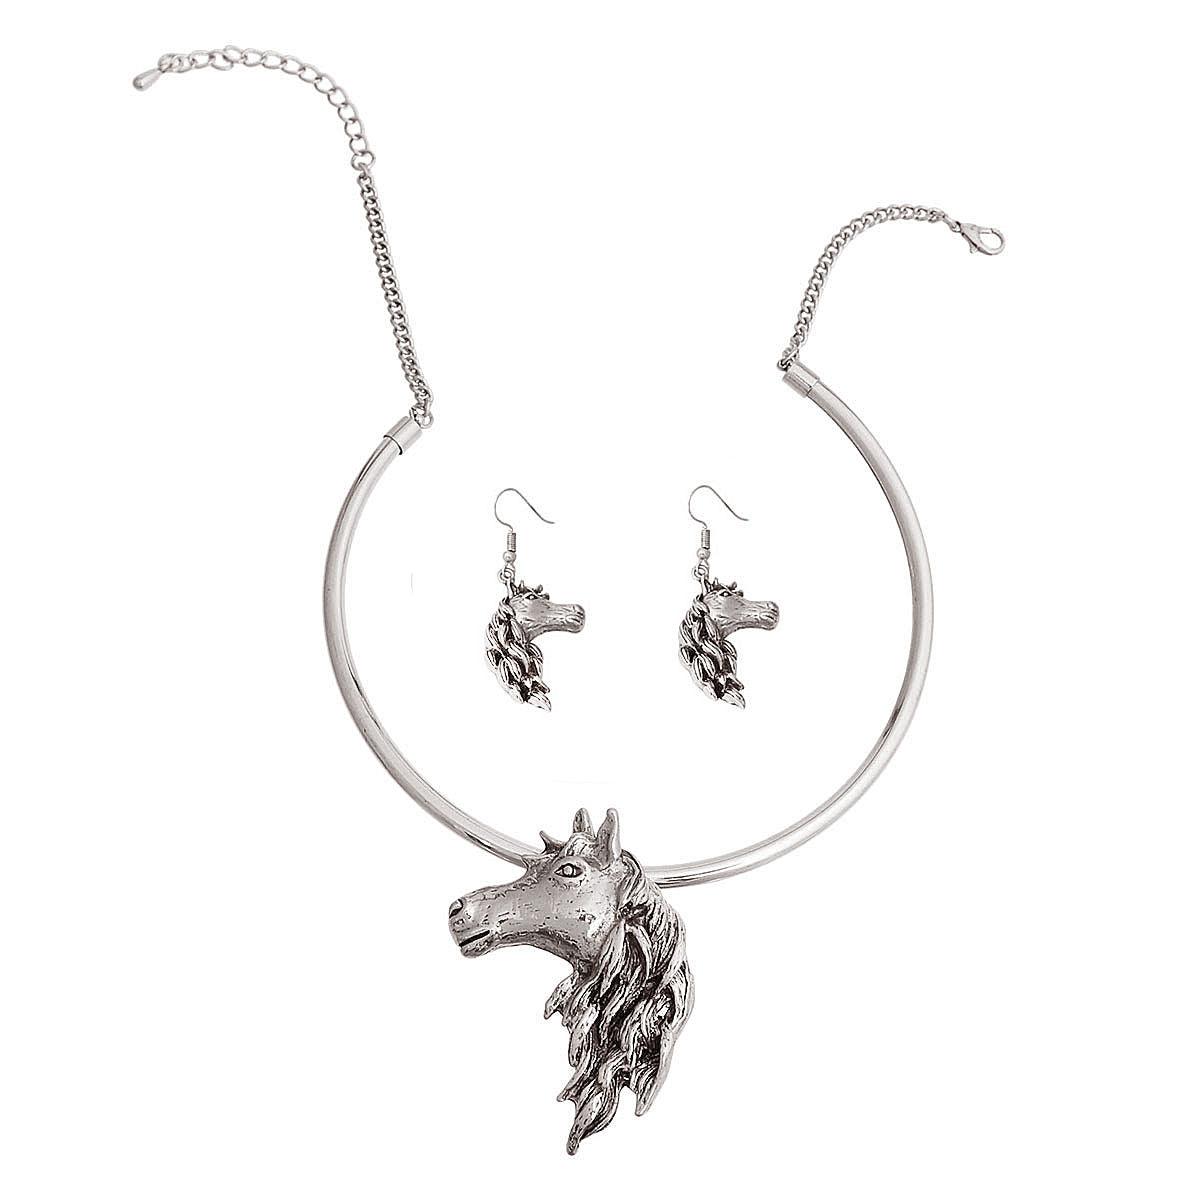 Horse Lovers' Dream: Silver Tone Earrings & Rigid Choker Necklace Set